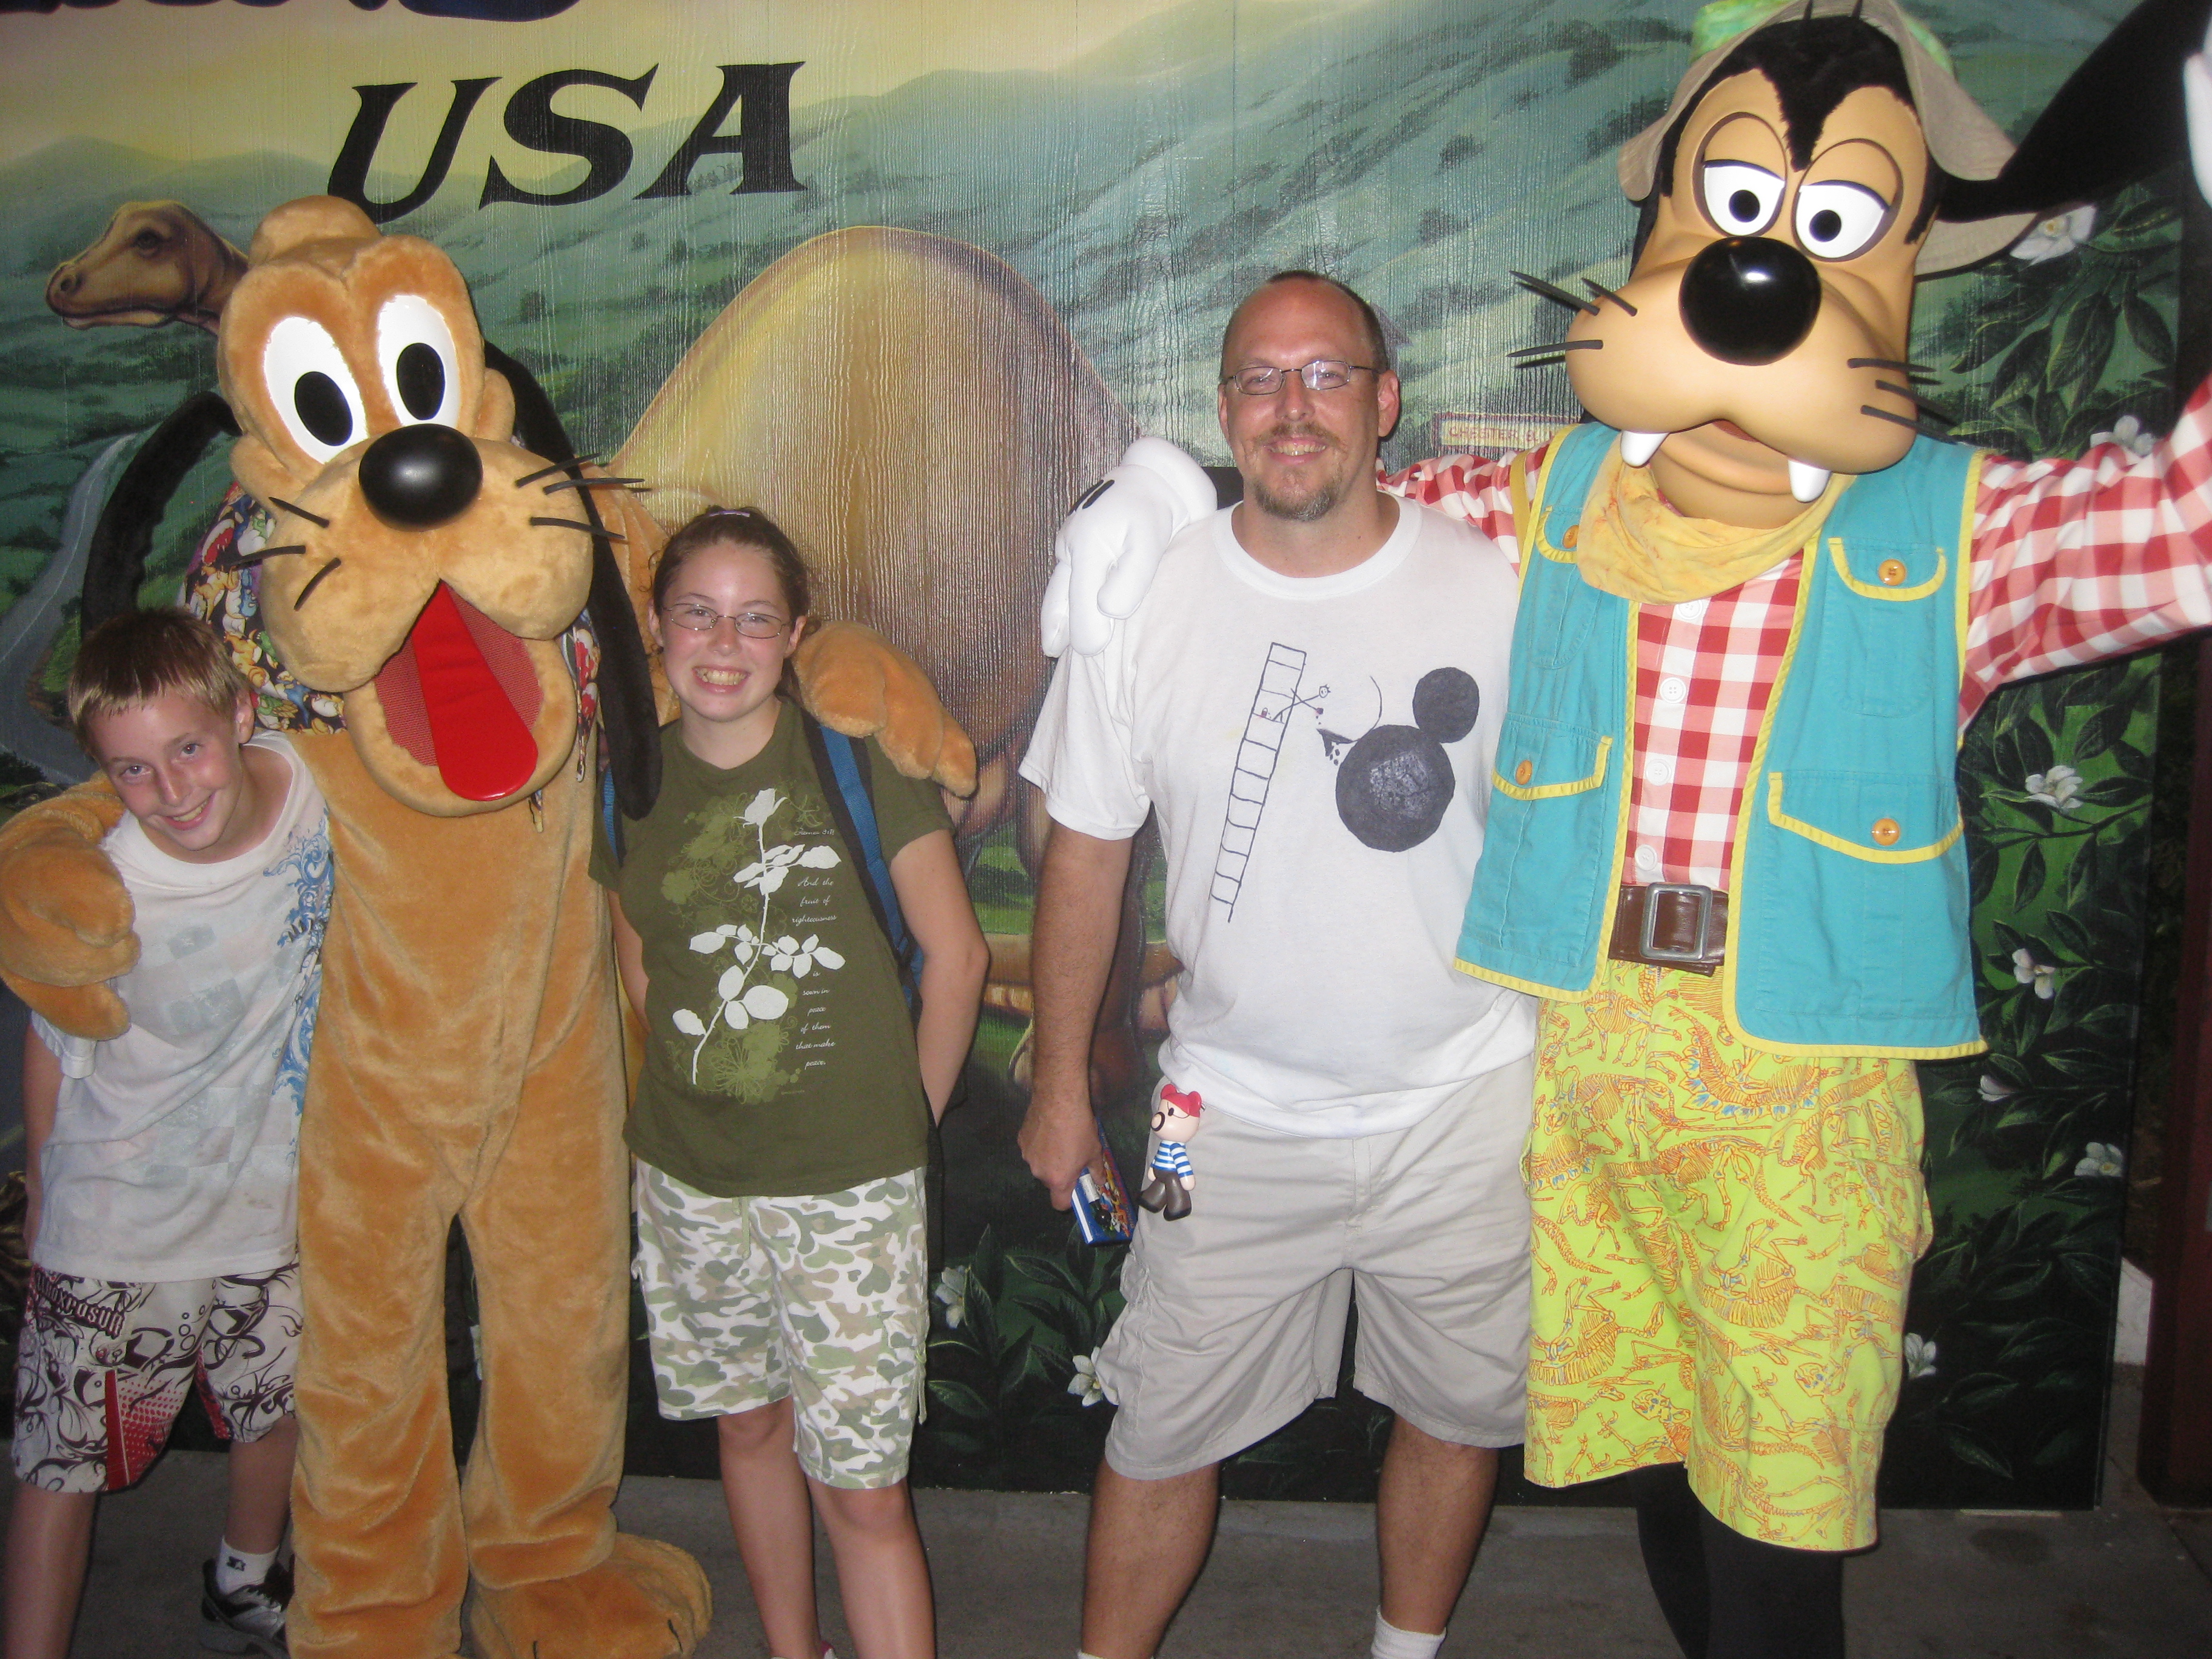 Pluto and Goofy at Dinoland in Animal Kingdom 2010